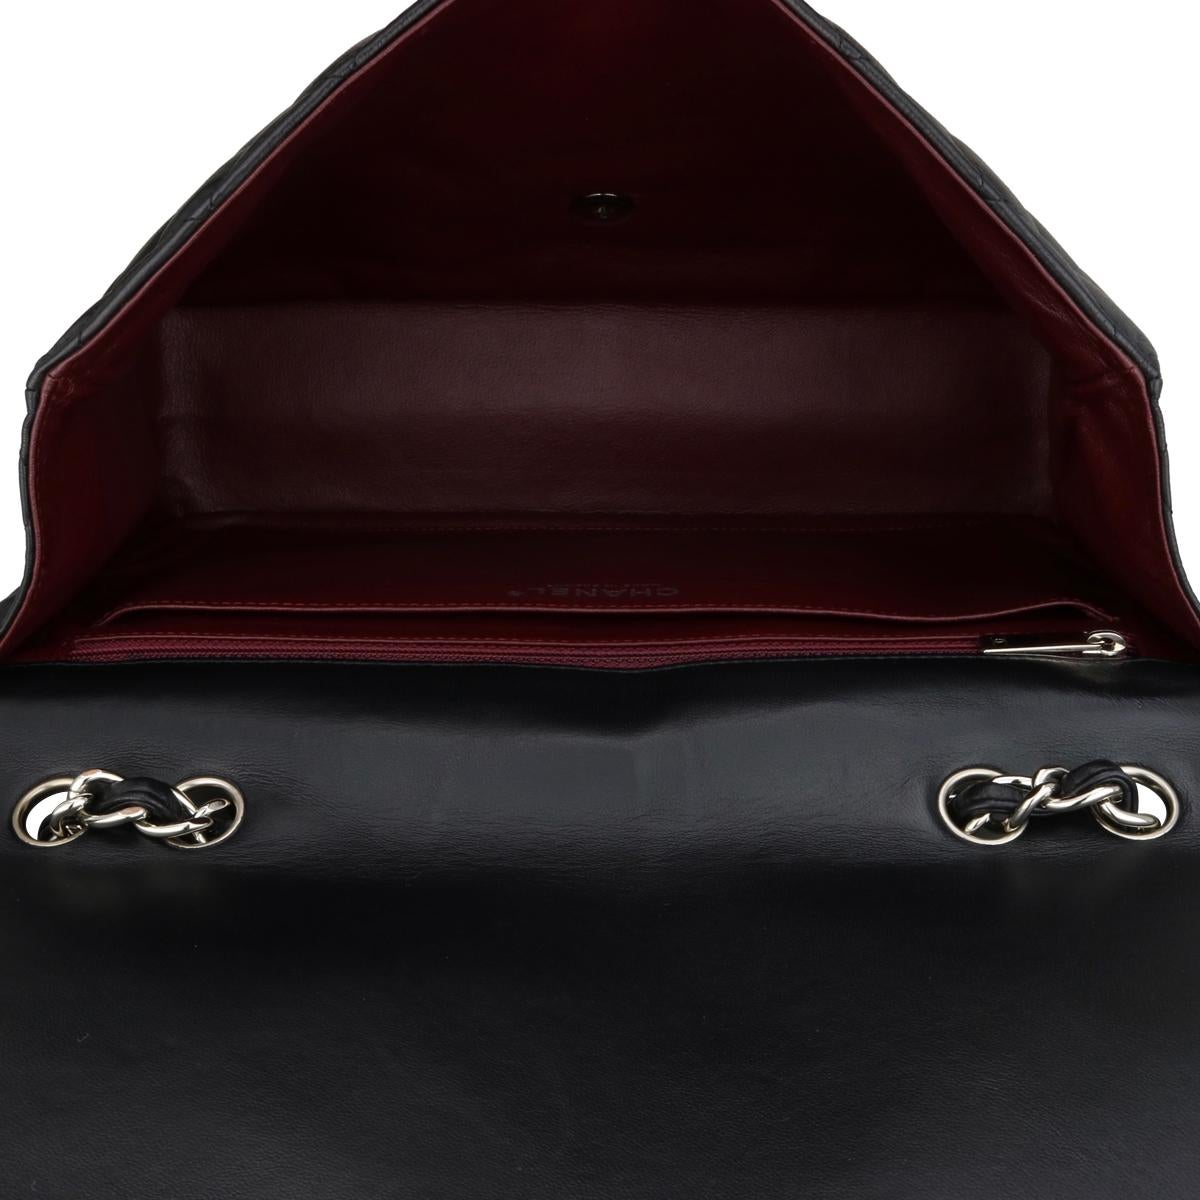 CHANEL Single Flap Jumbo Bag in Black Lambskin with Silver-Tone Hardware 2010 For Sale 11